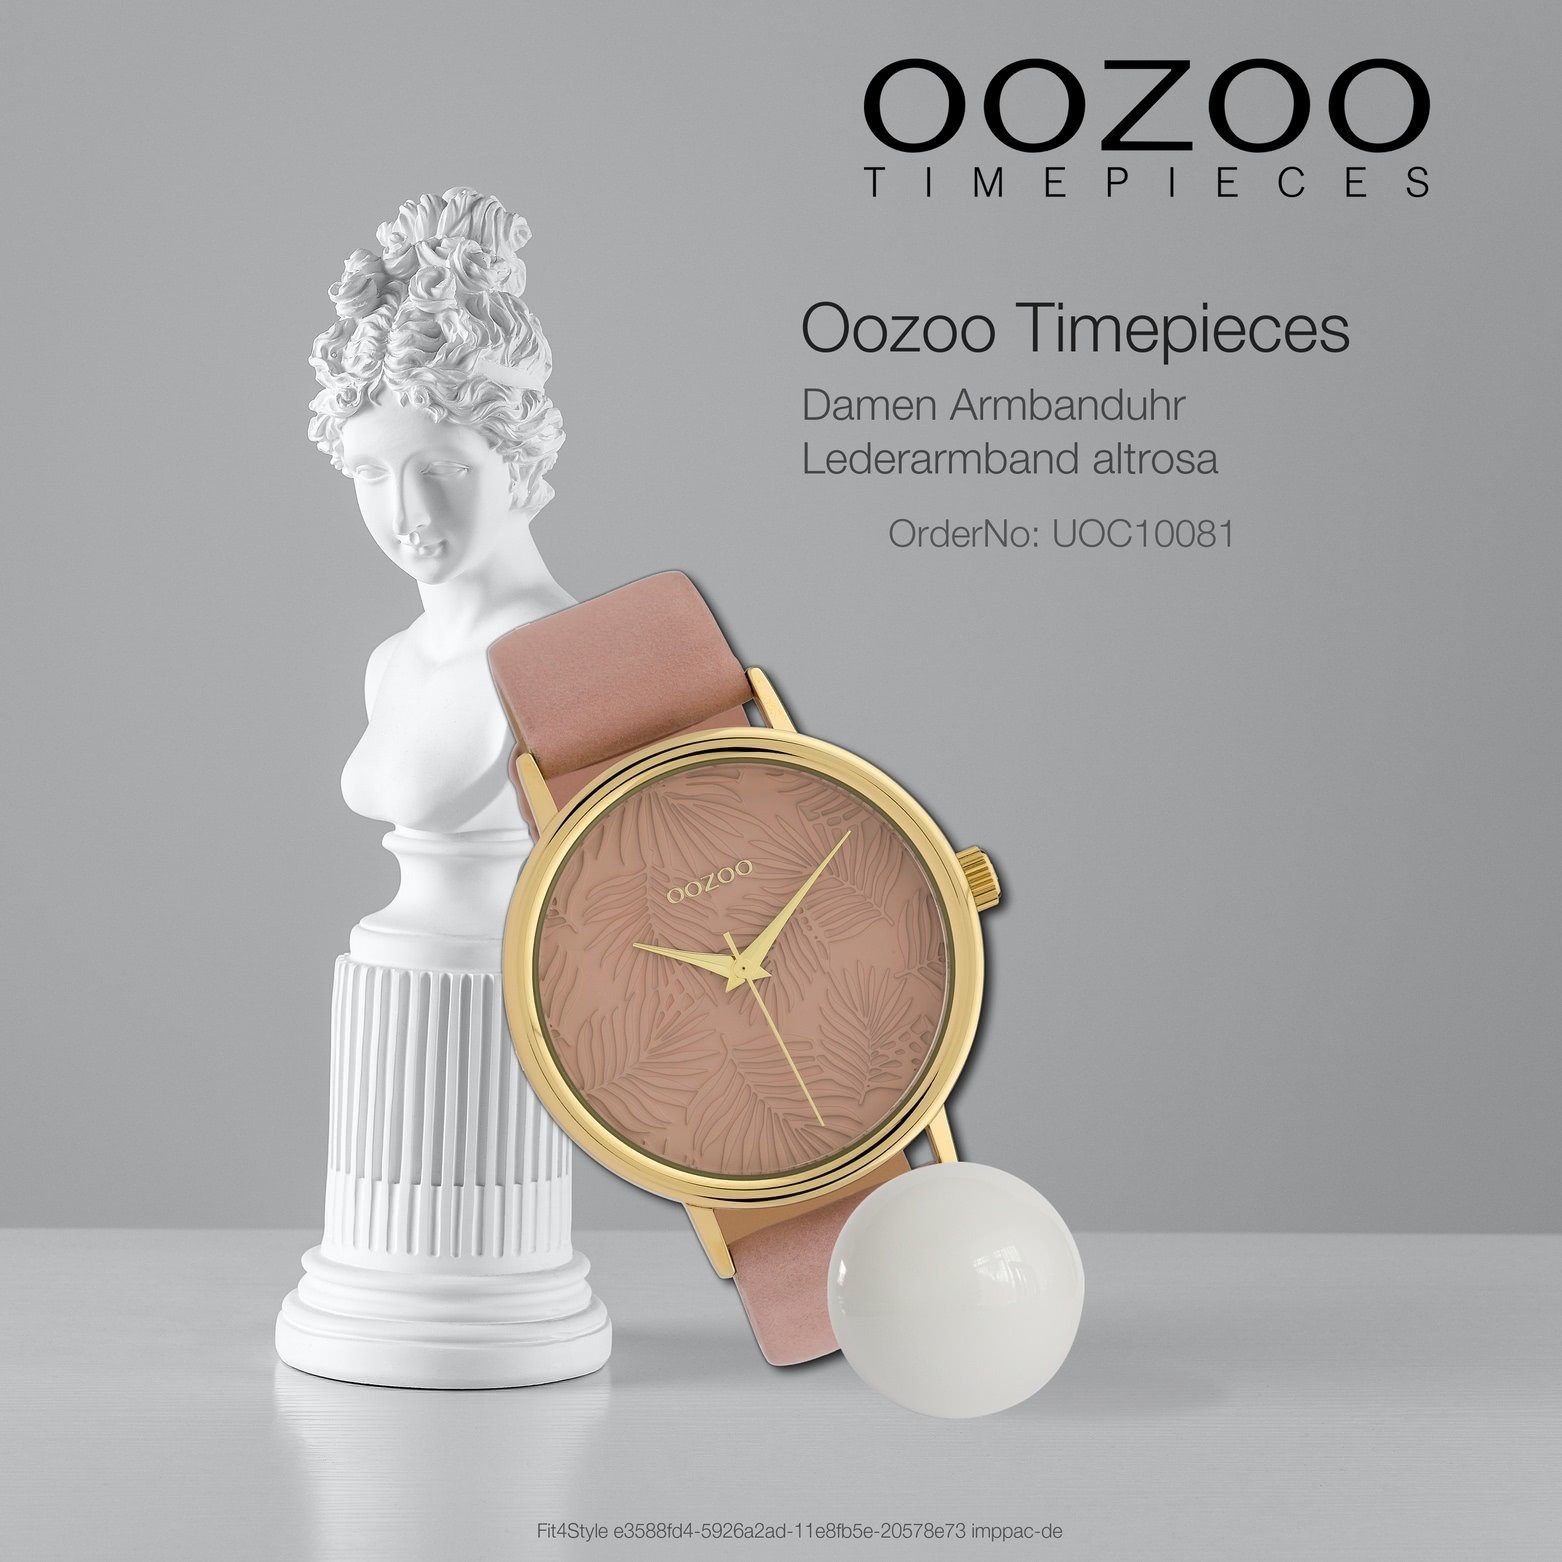 42mm) Armbanduhr, Lederarmband, Damen OOZOO Fashion-Style groß (ca. Oozoo rund, Damenuhr Quarzuhr